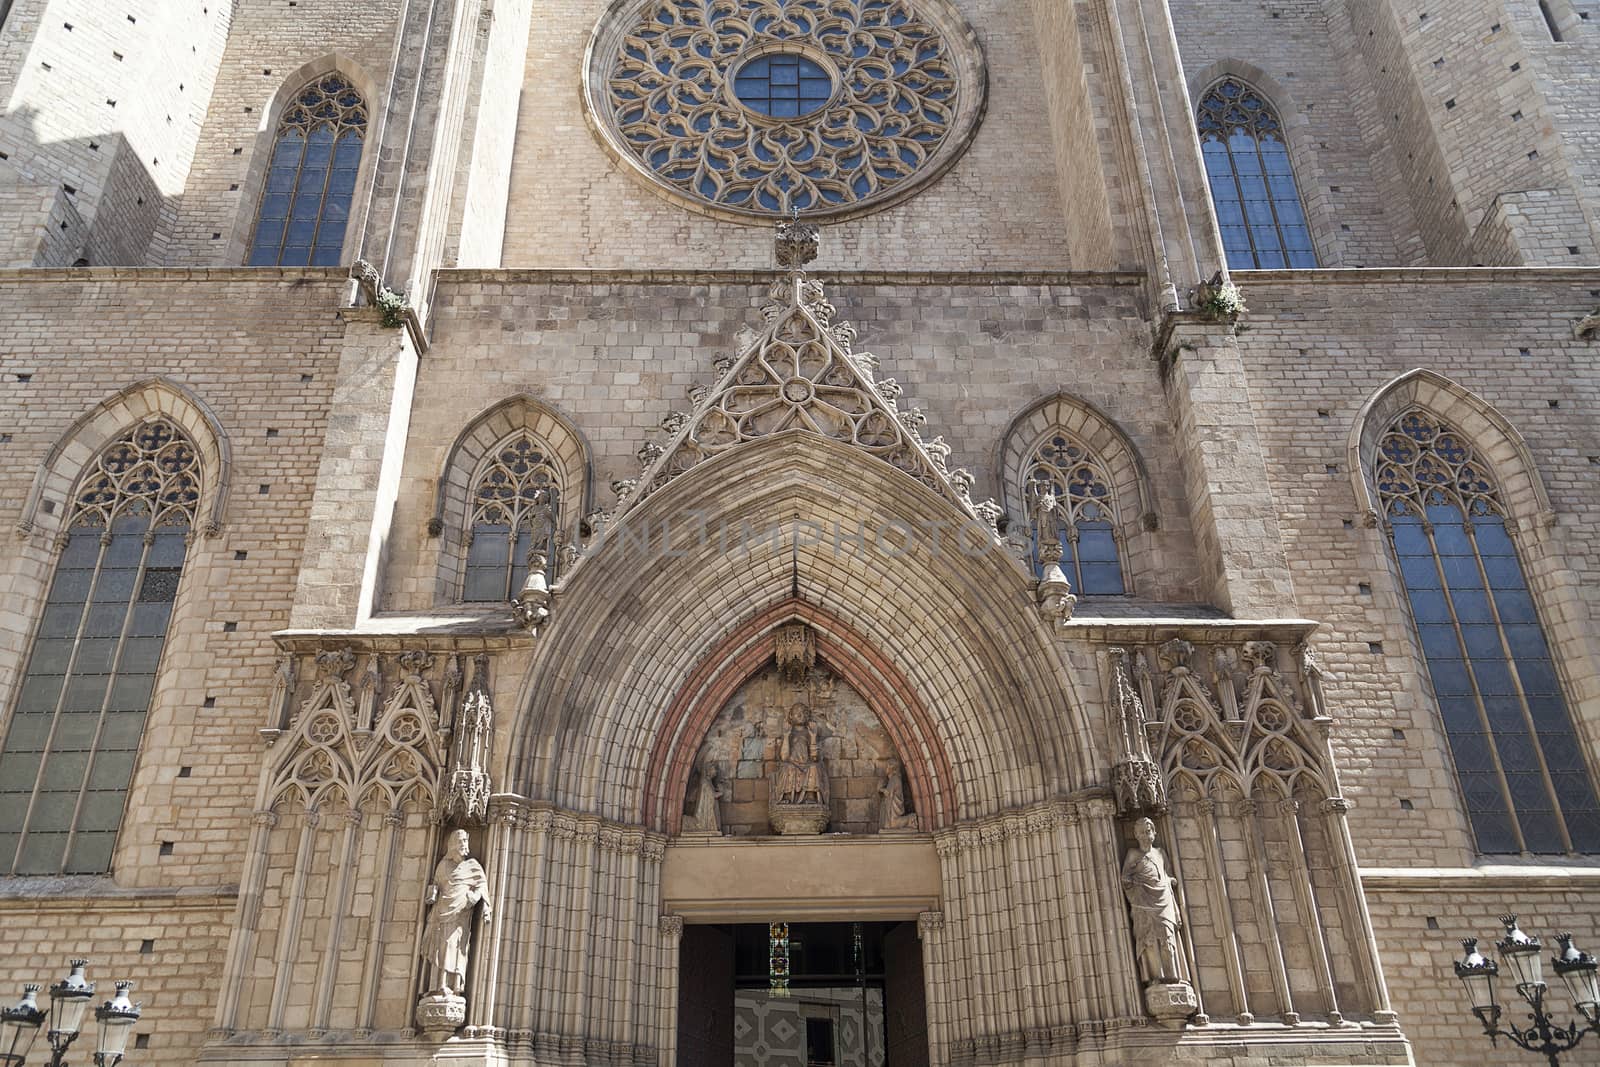 Facade of Catalan Gothic church Santa Maria del Mar, Barcelona, Spain by mychadre77